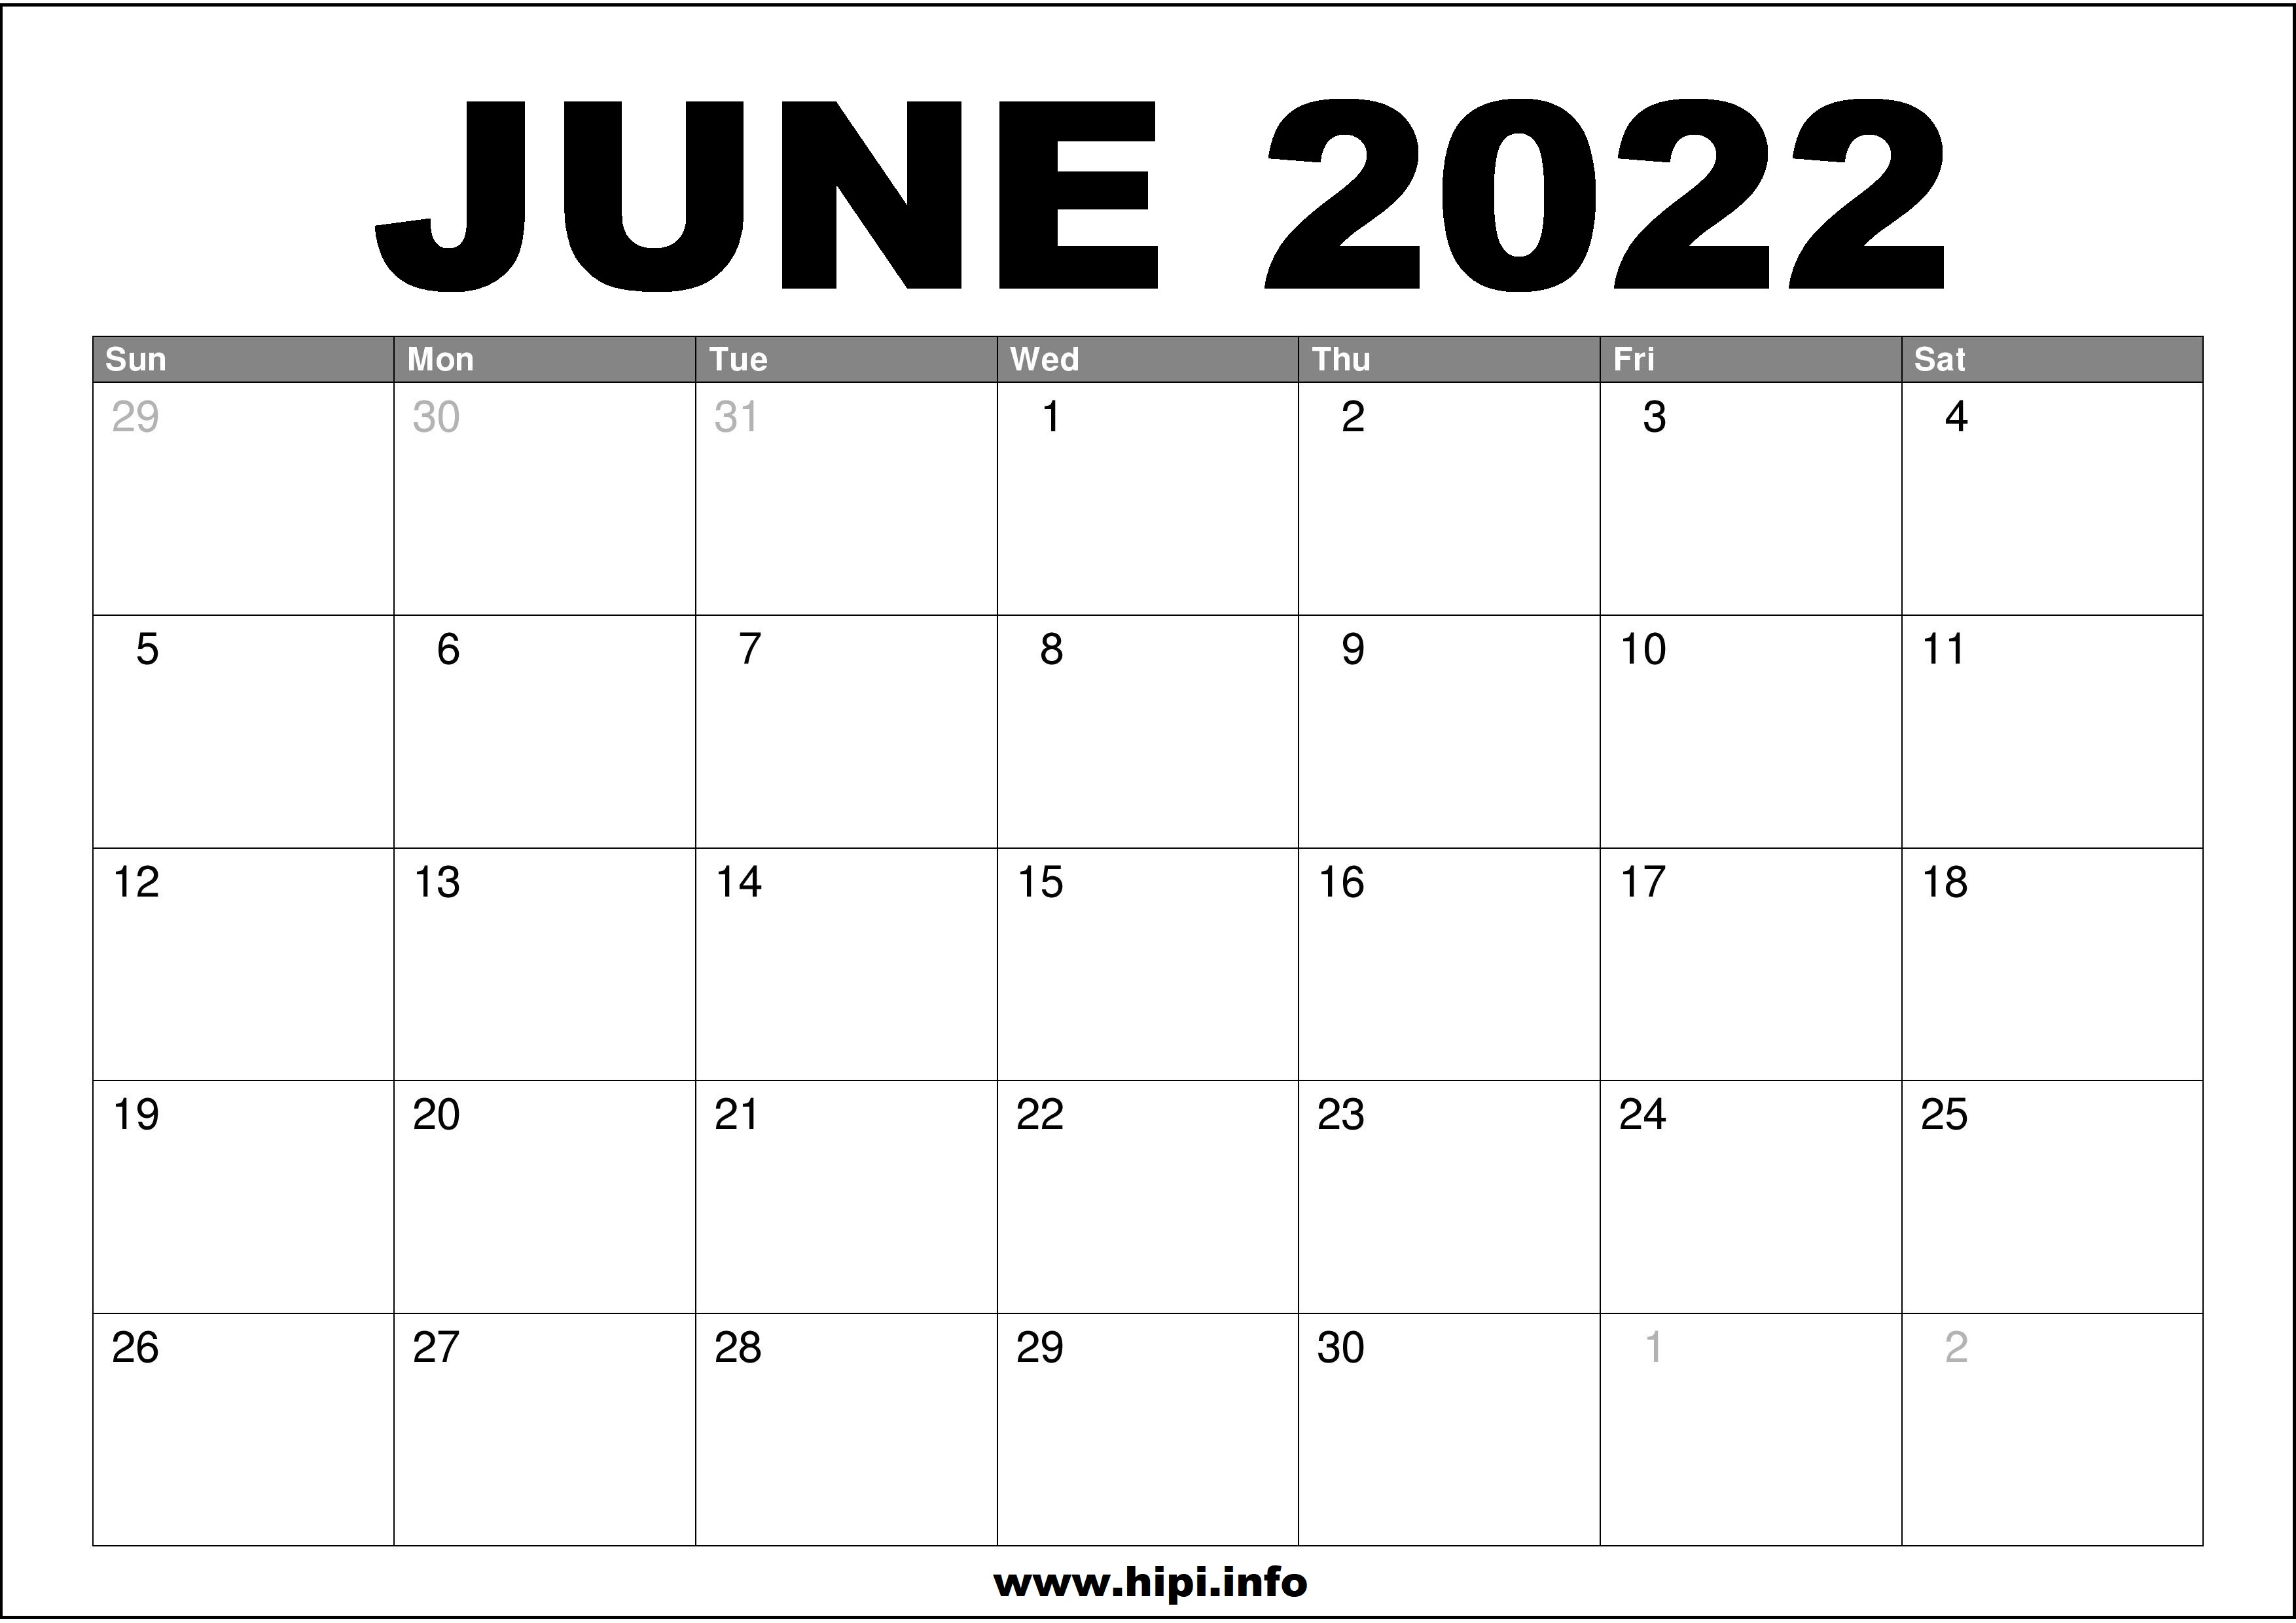 June Calendar Template 2022 June 2022 Calendar Printable Free - Hipi.info | Calendars Printable Free